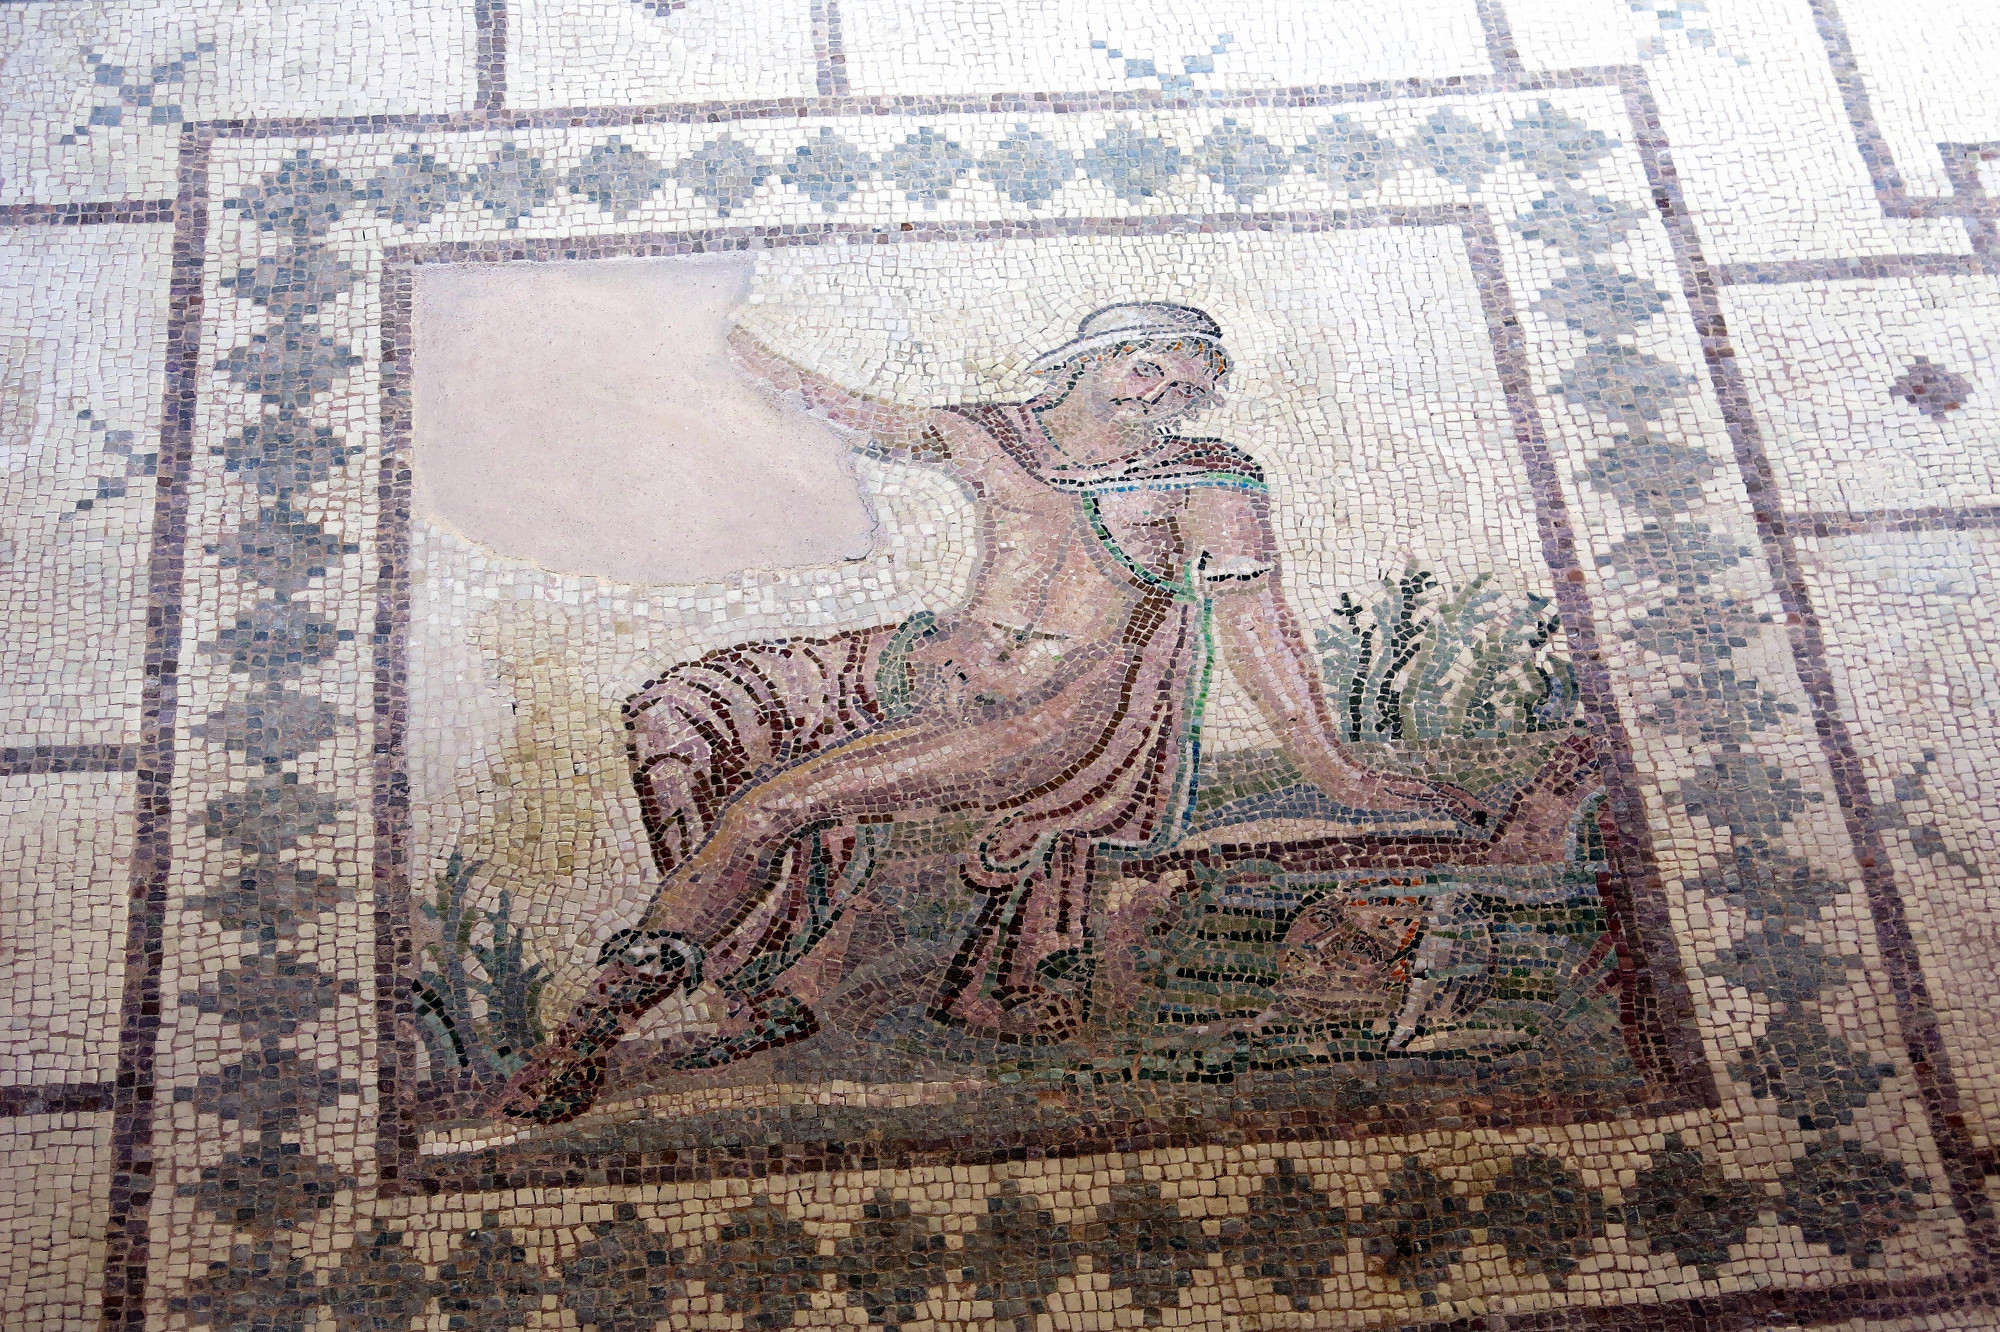 Mosaic depicting Narcissus